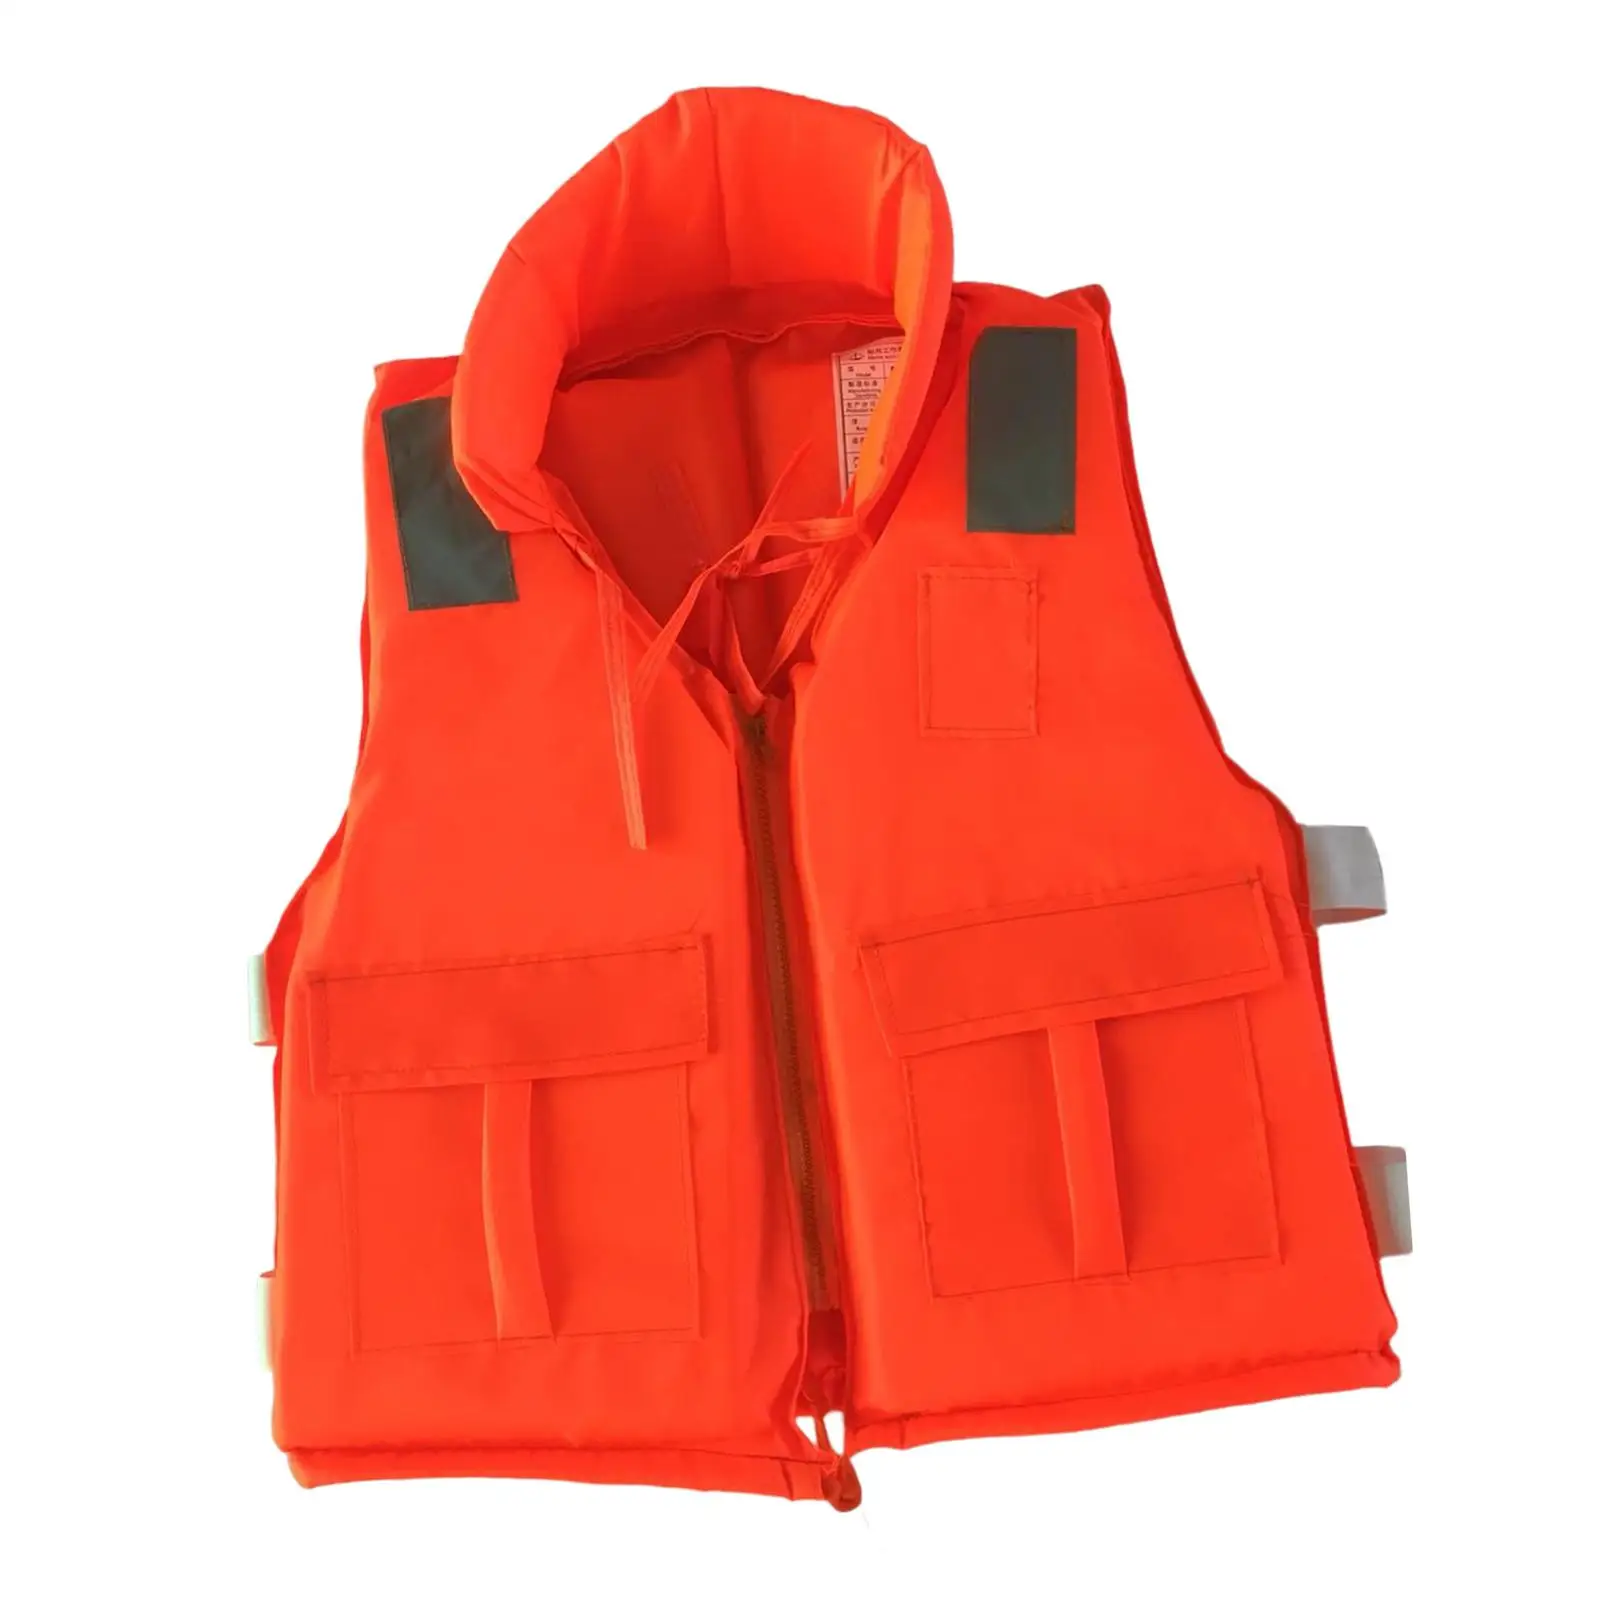 Outdoor Life Jacket Reflective Adjustable Fly Fishing Jacket Waistcoat Adult Life Vest for Canoeing Wimming Sailing Ski Boating